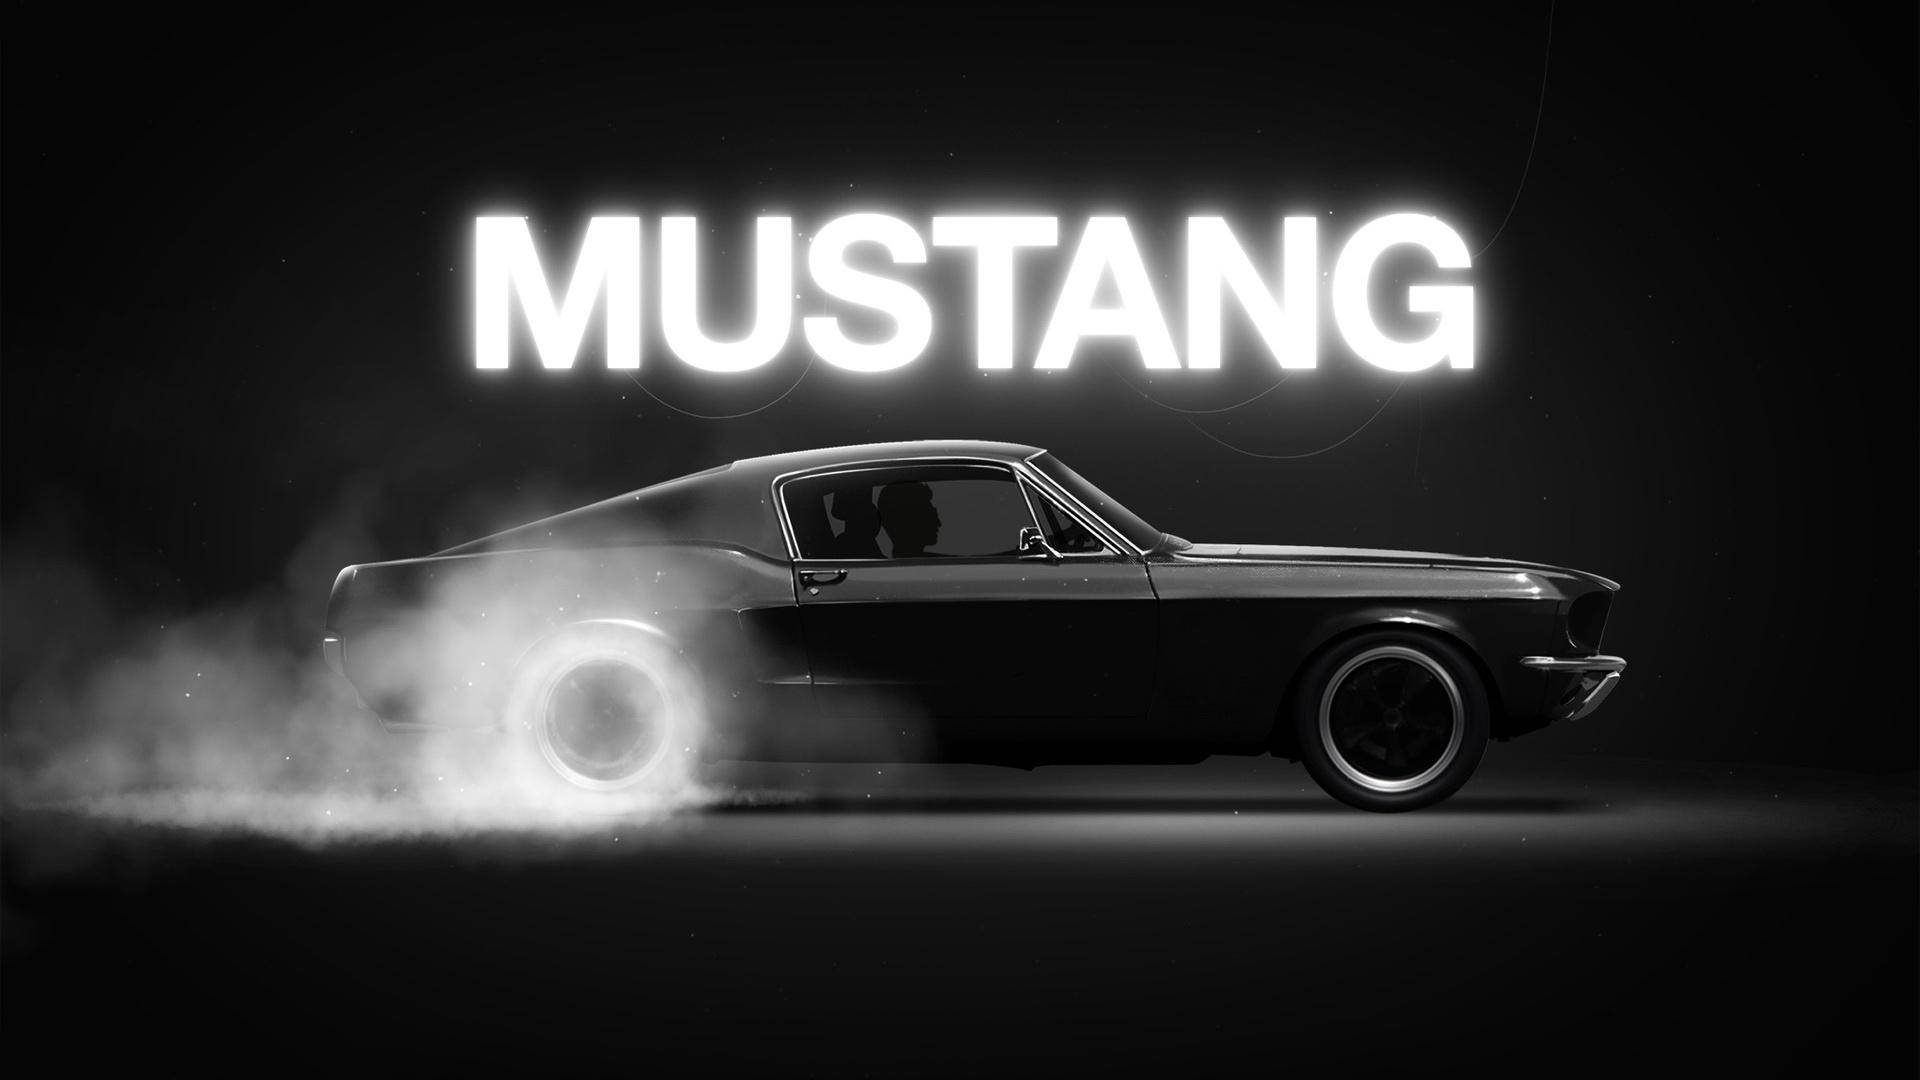 Mustang Light Signage Wallpaper